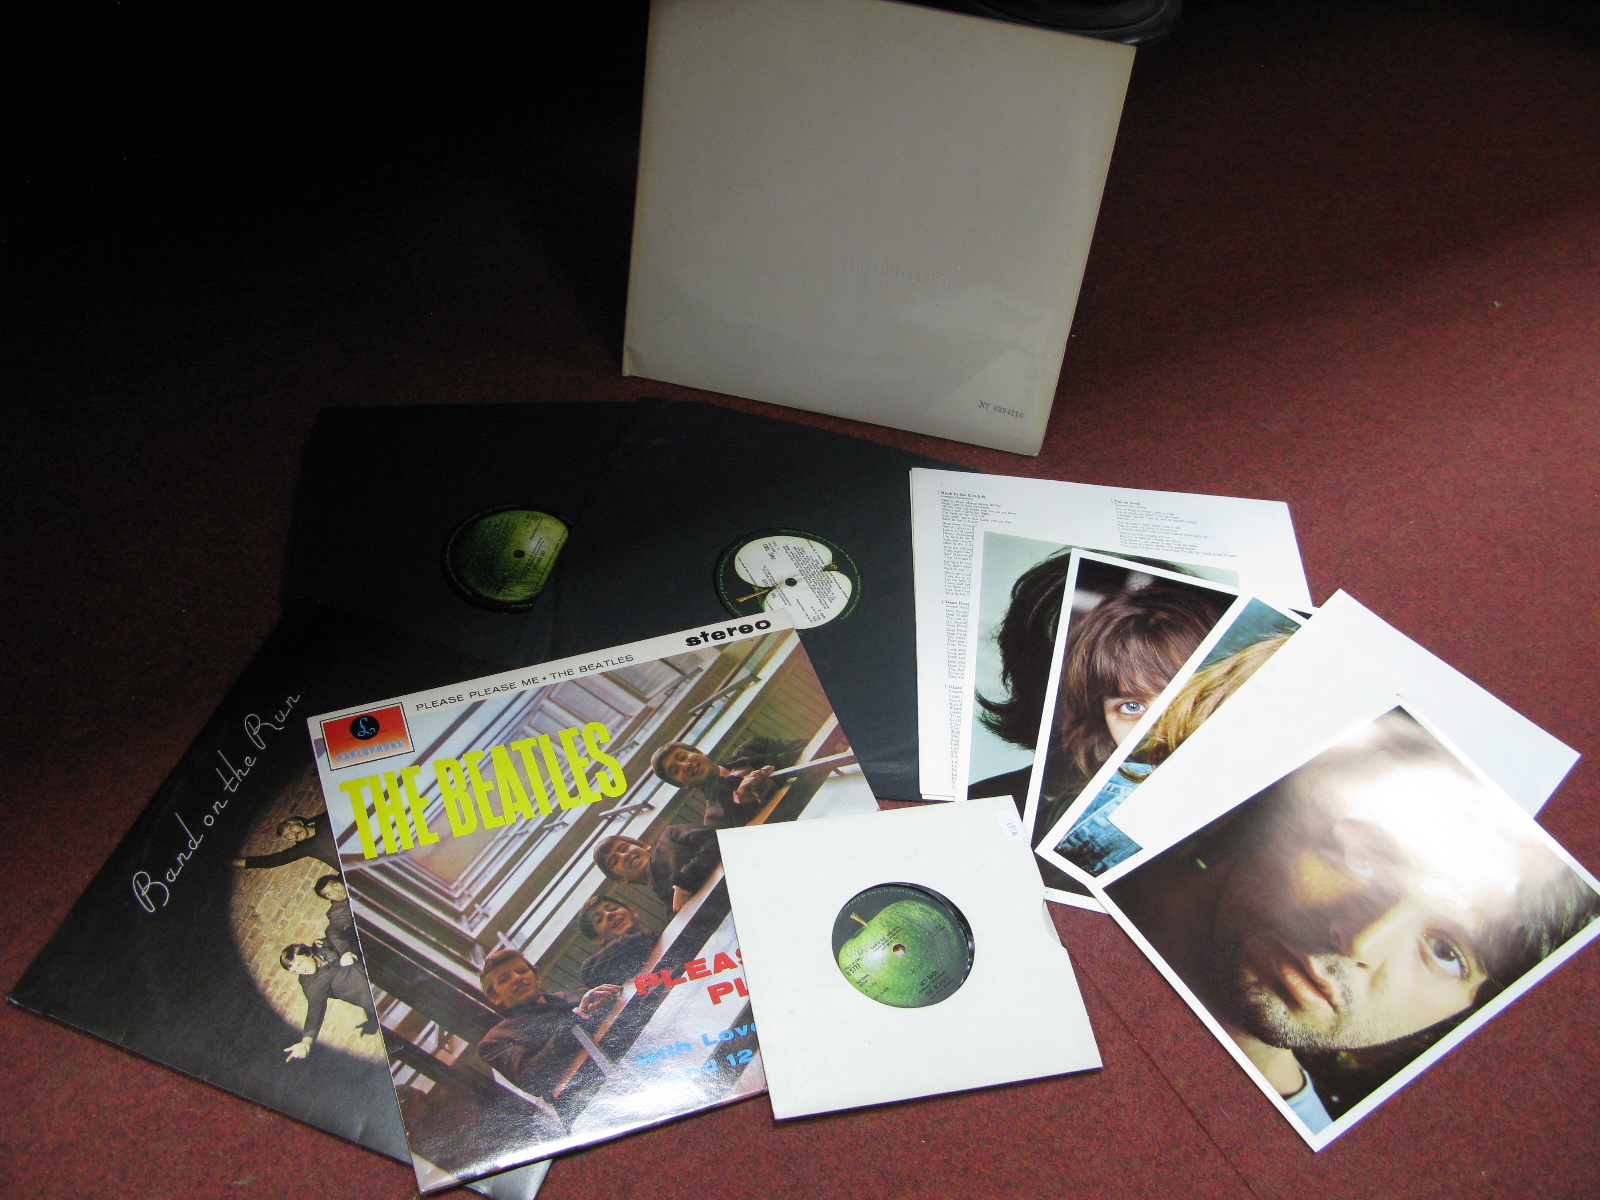 The Beatles 'White Album' LP, (1968, PMC 7068, Apple, -1 -1 -1 -1 matrix), top loader, black inner